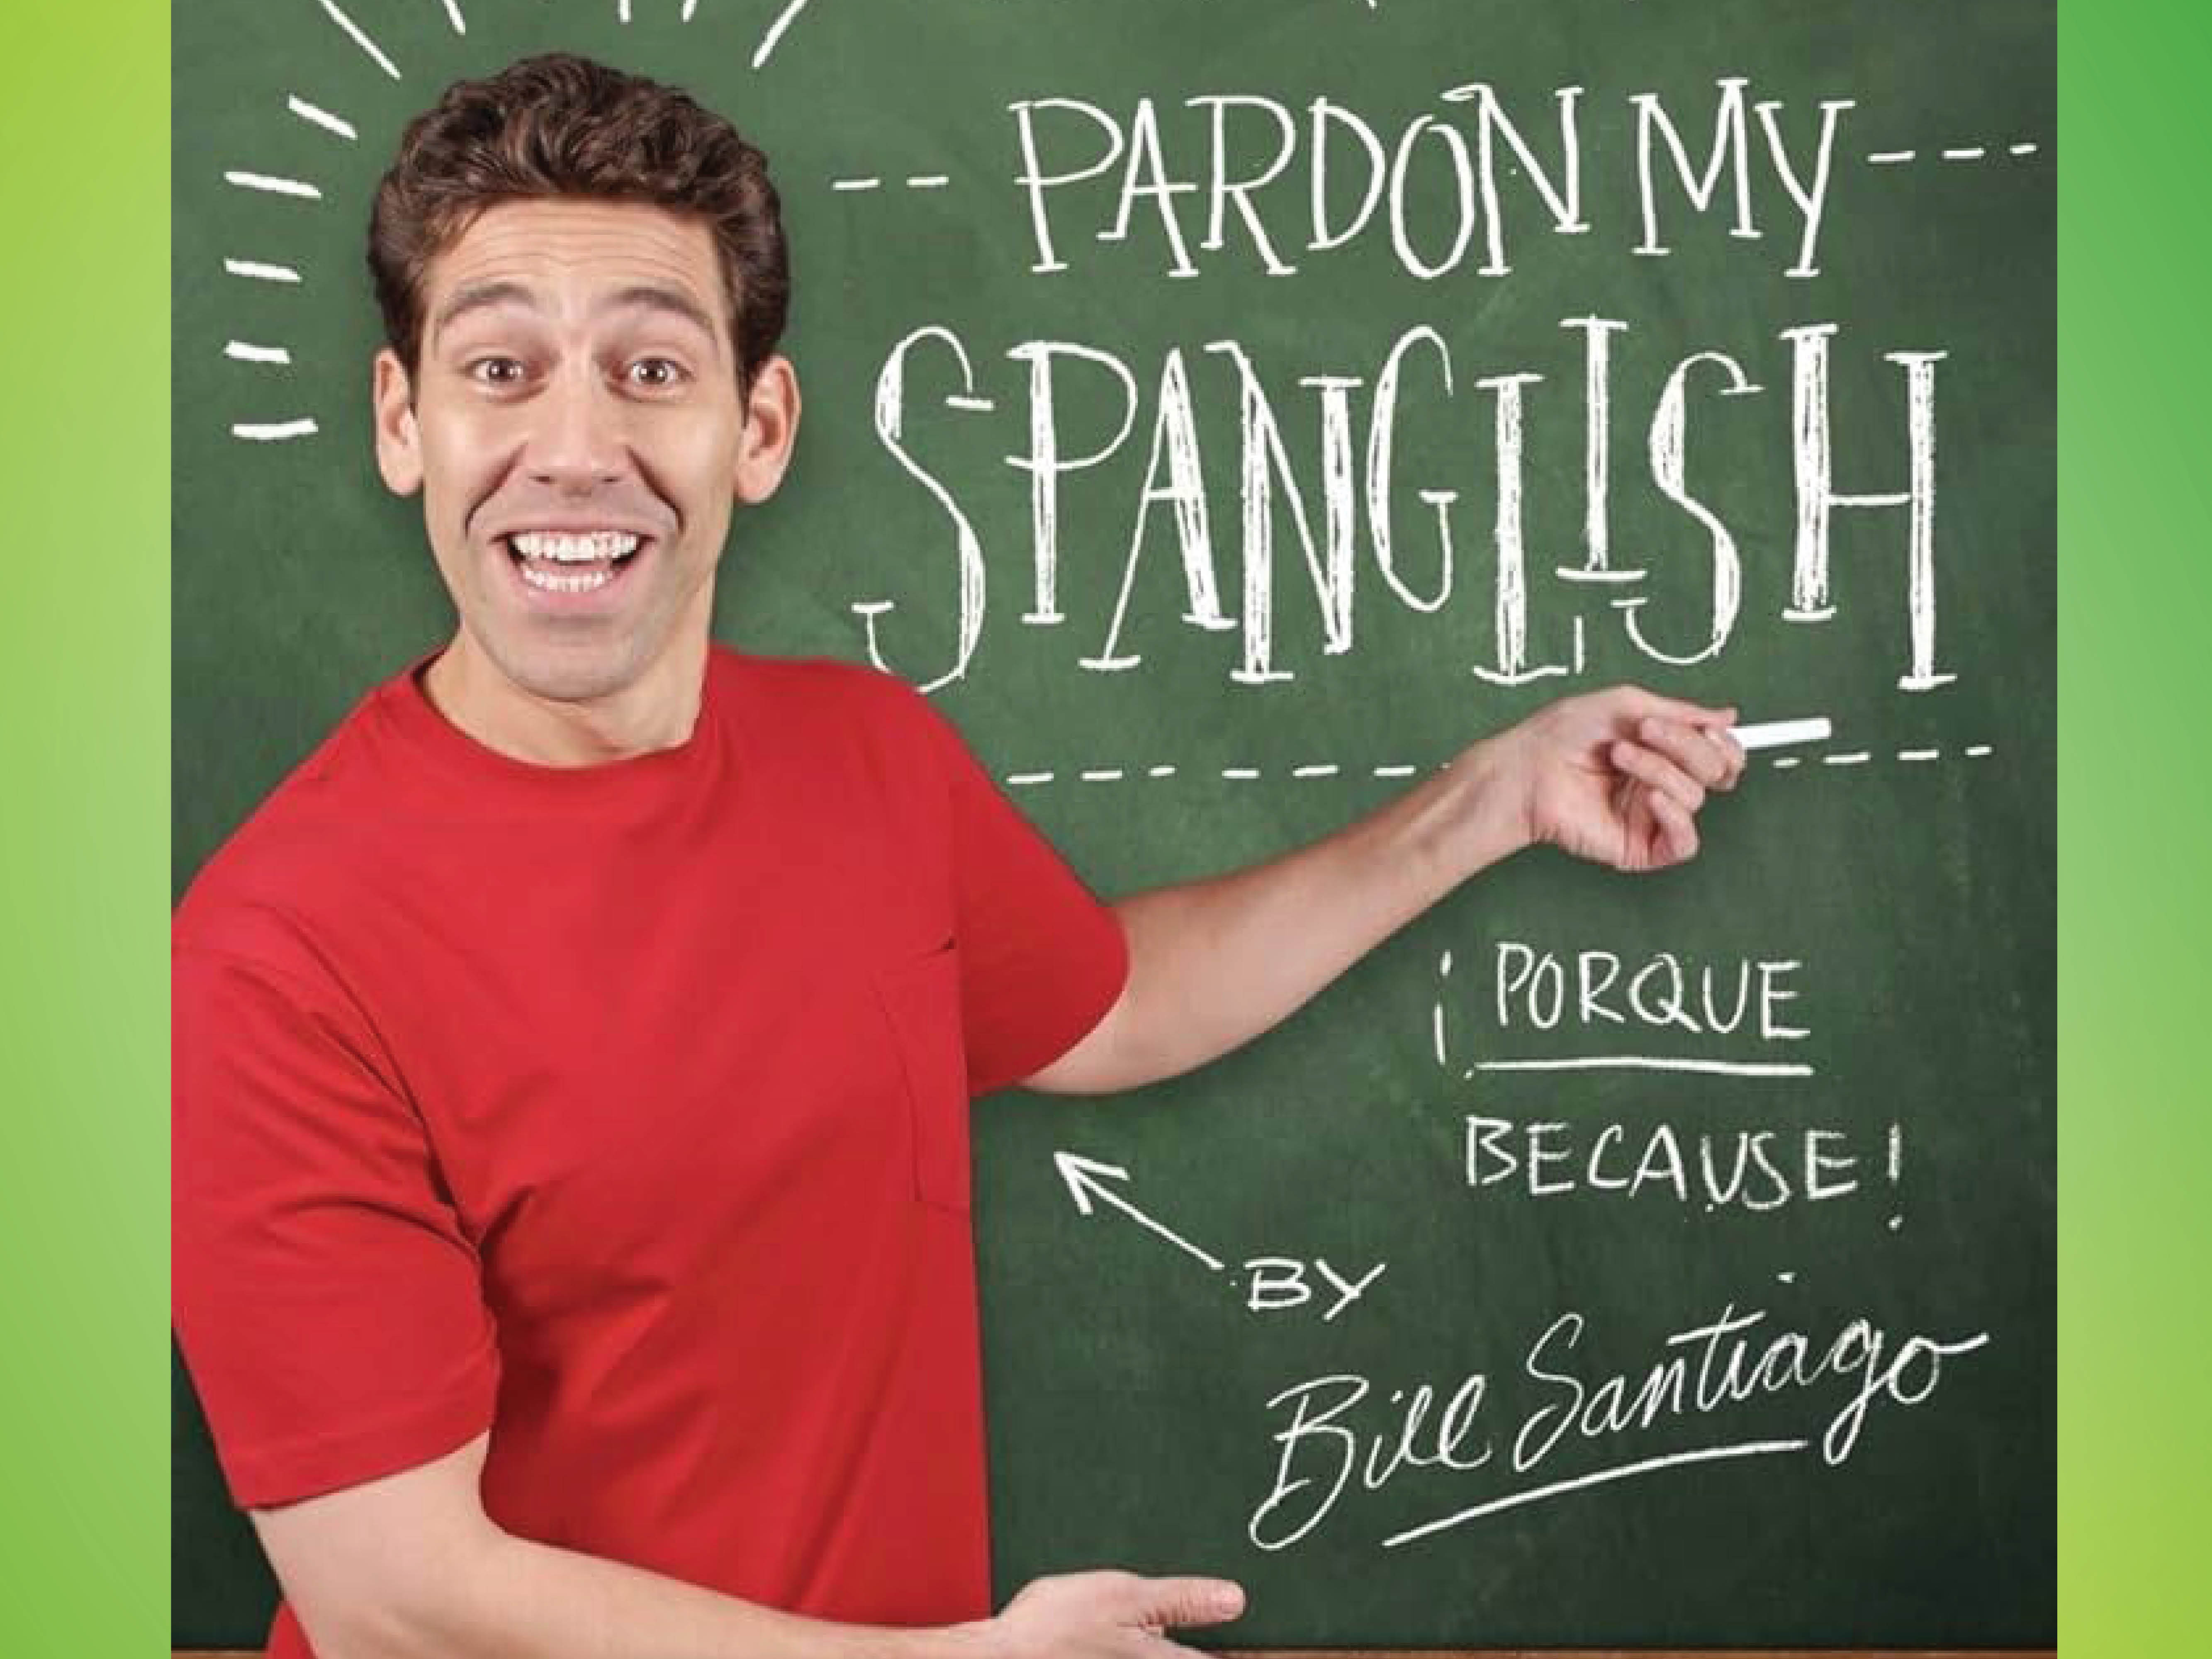 comedian Bill Santiago pointing to "pardon my spanglish" written on a chalkboard